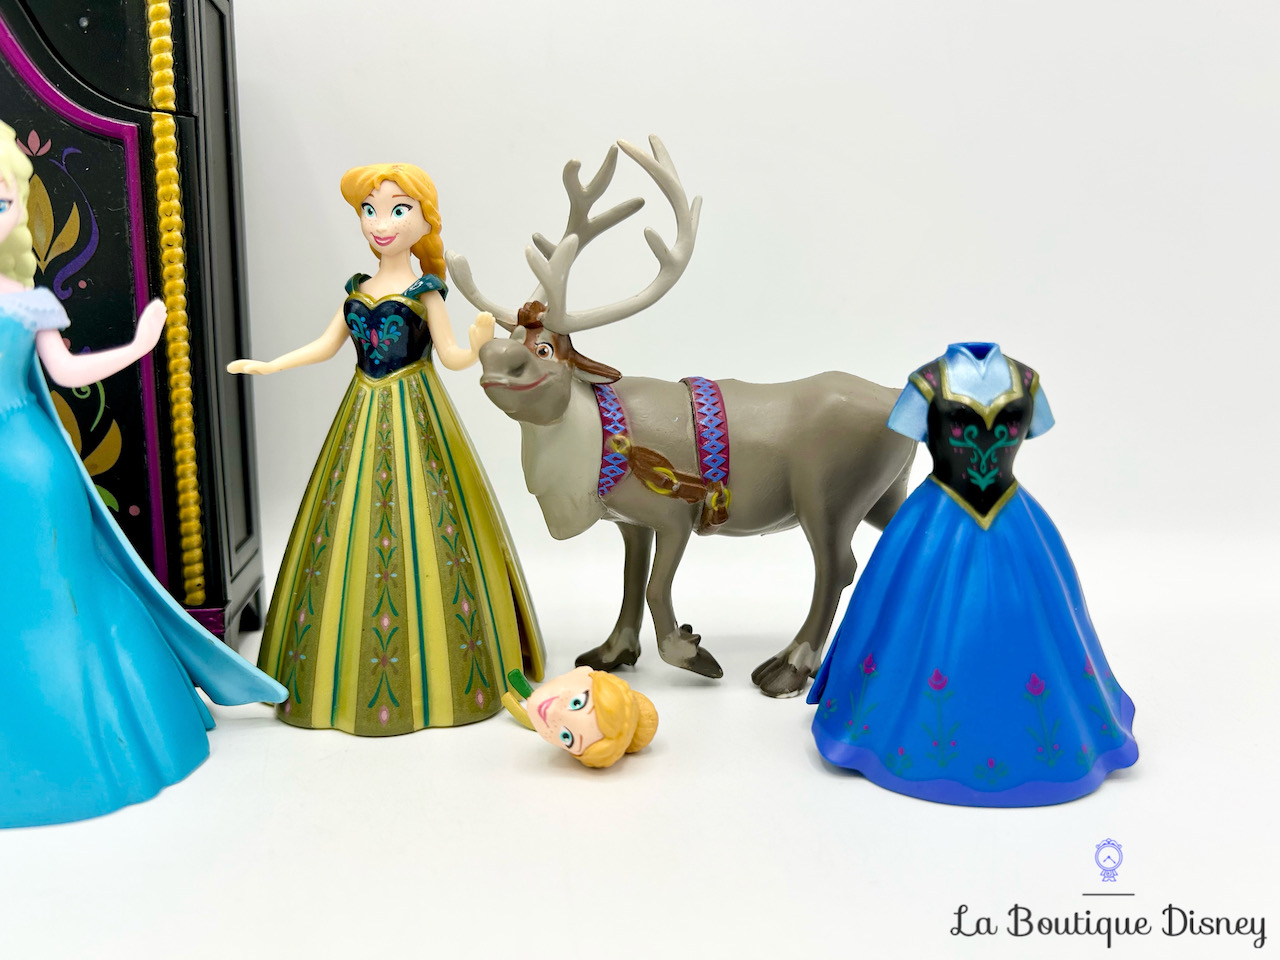 Figurine Magiclip Anna Elsa La reine des neiges Disney Parks Disney Princess Deluxe Dress Up Set Fashion Polly Pocket